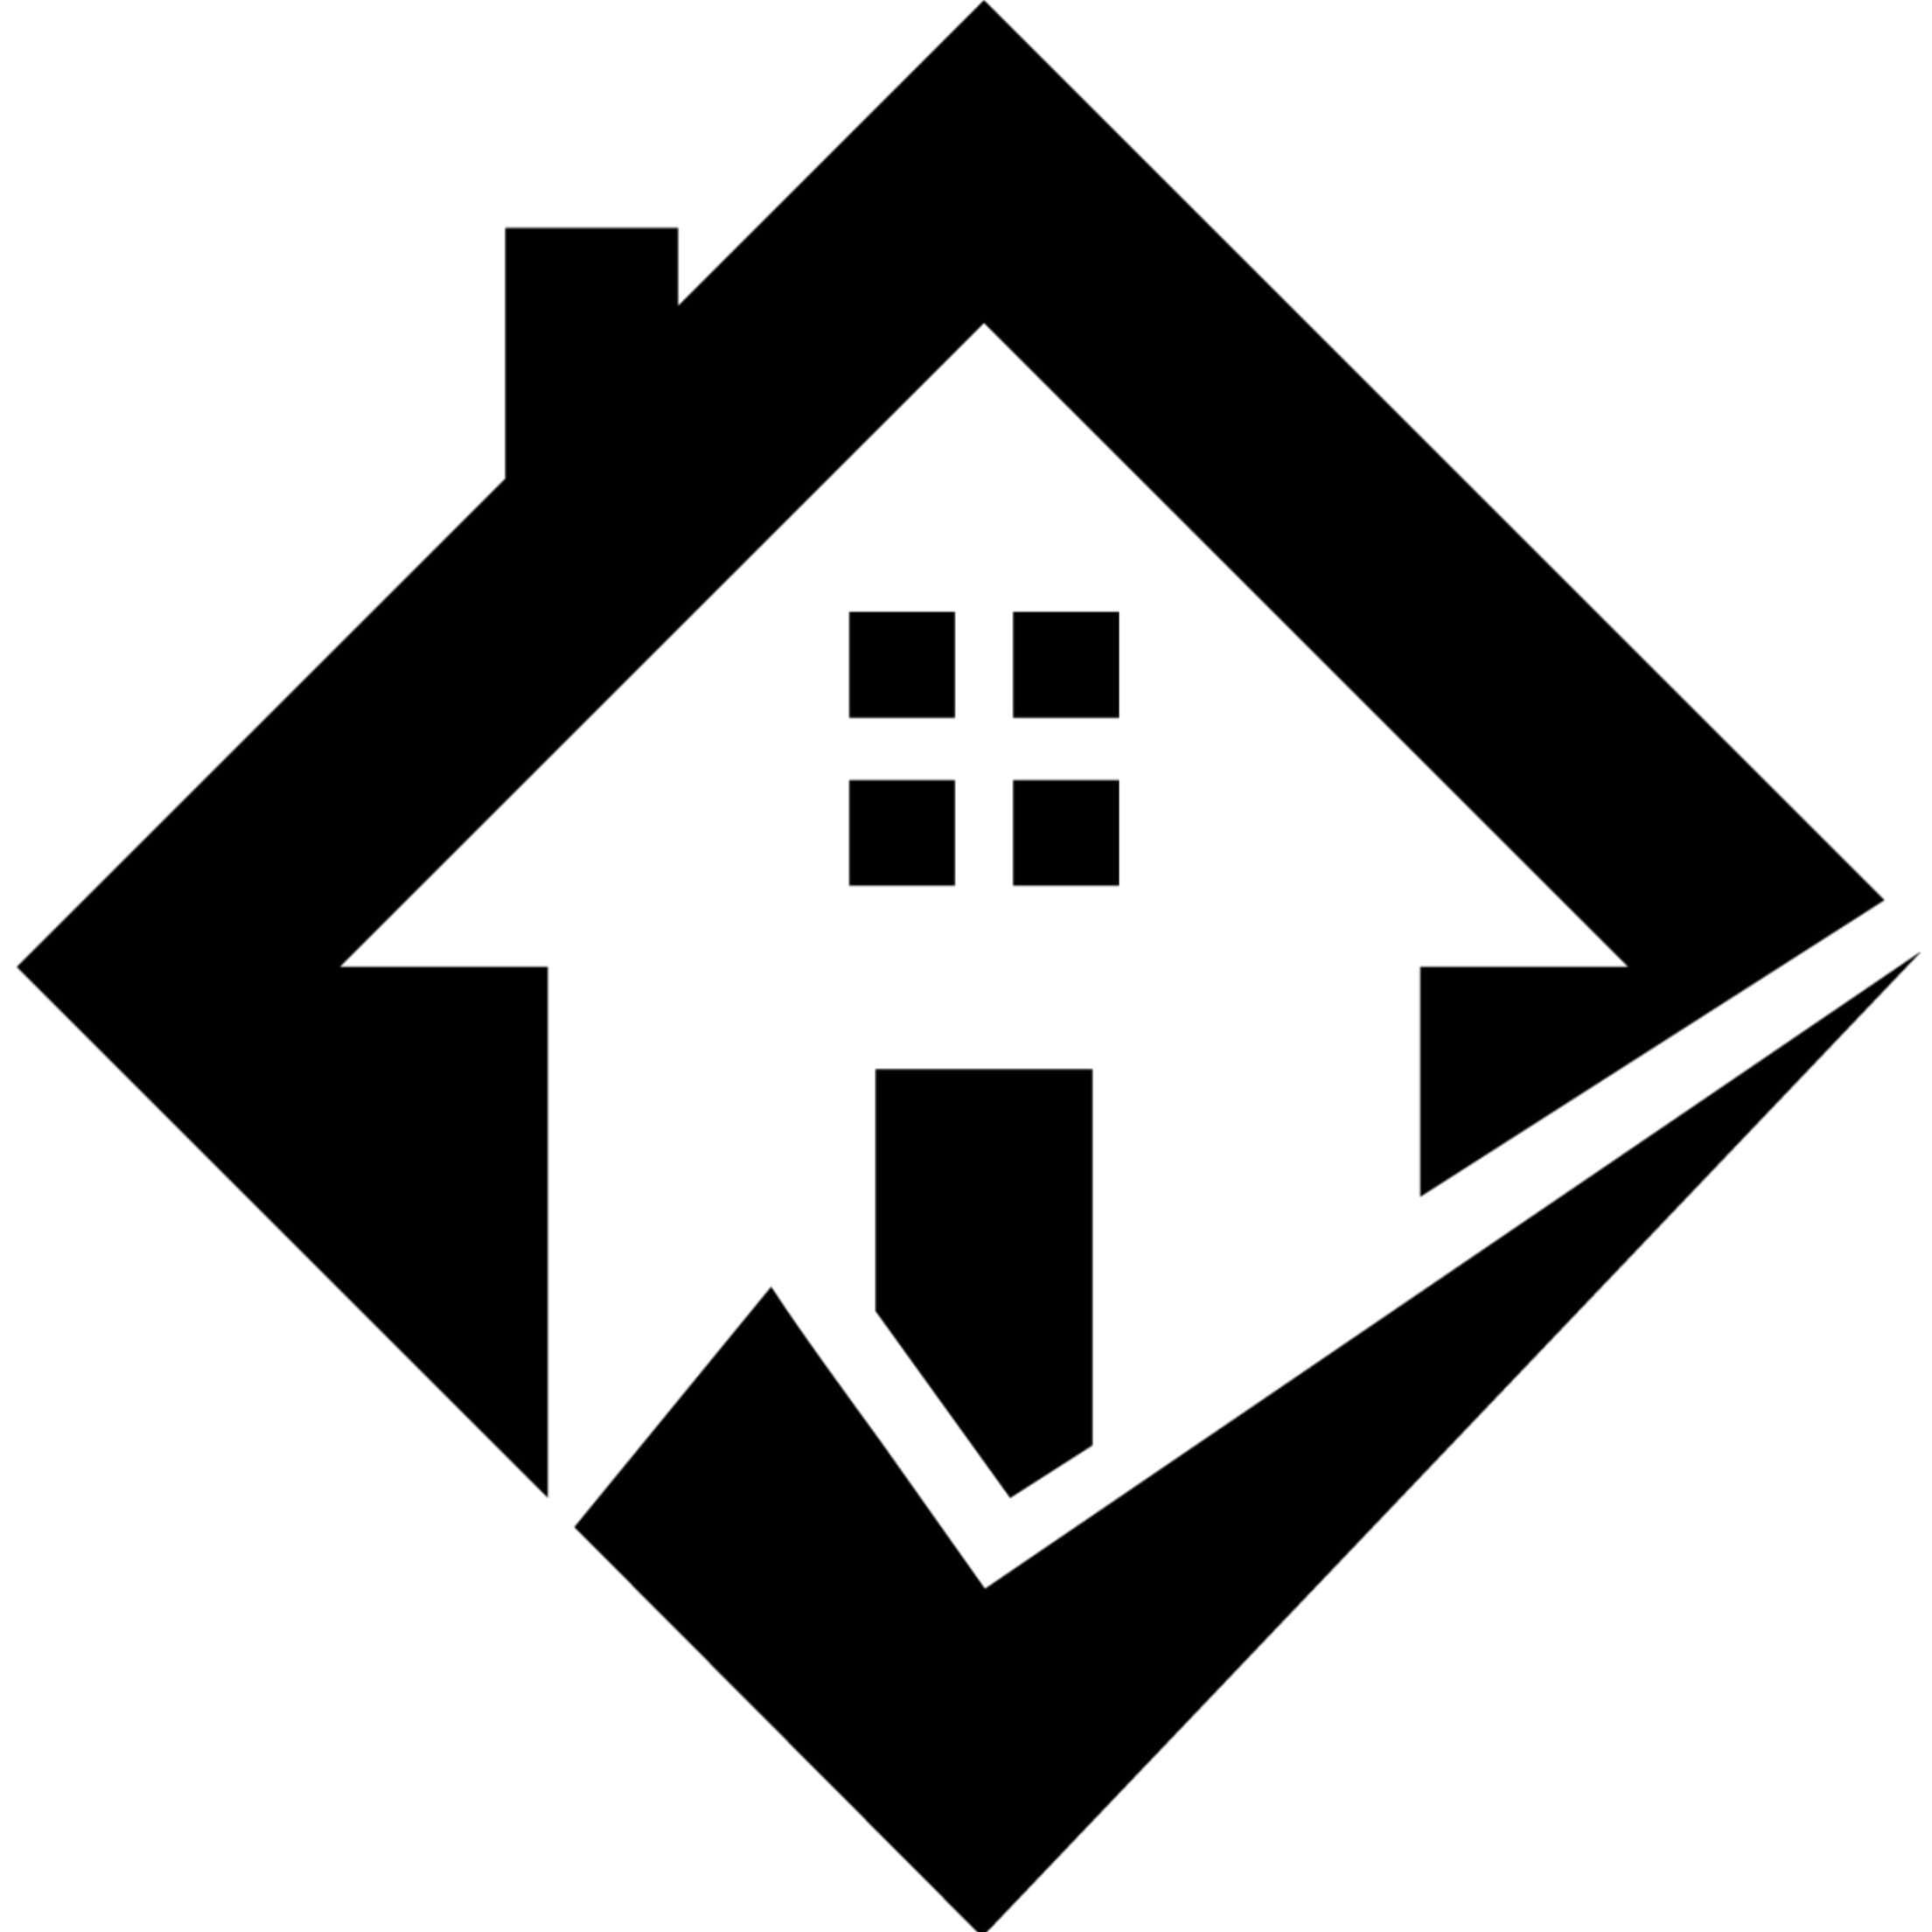 Villa Home Inspections Logo